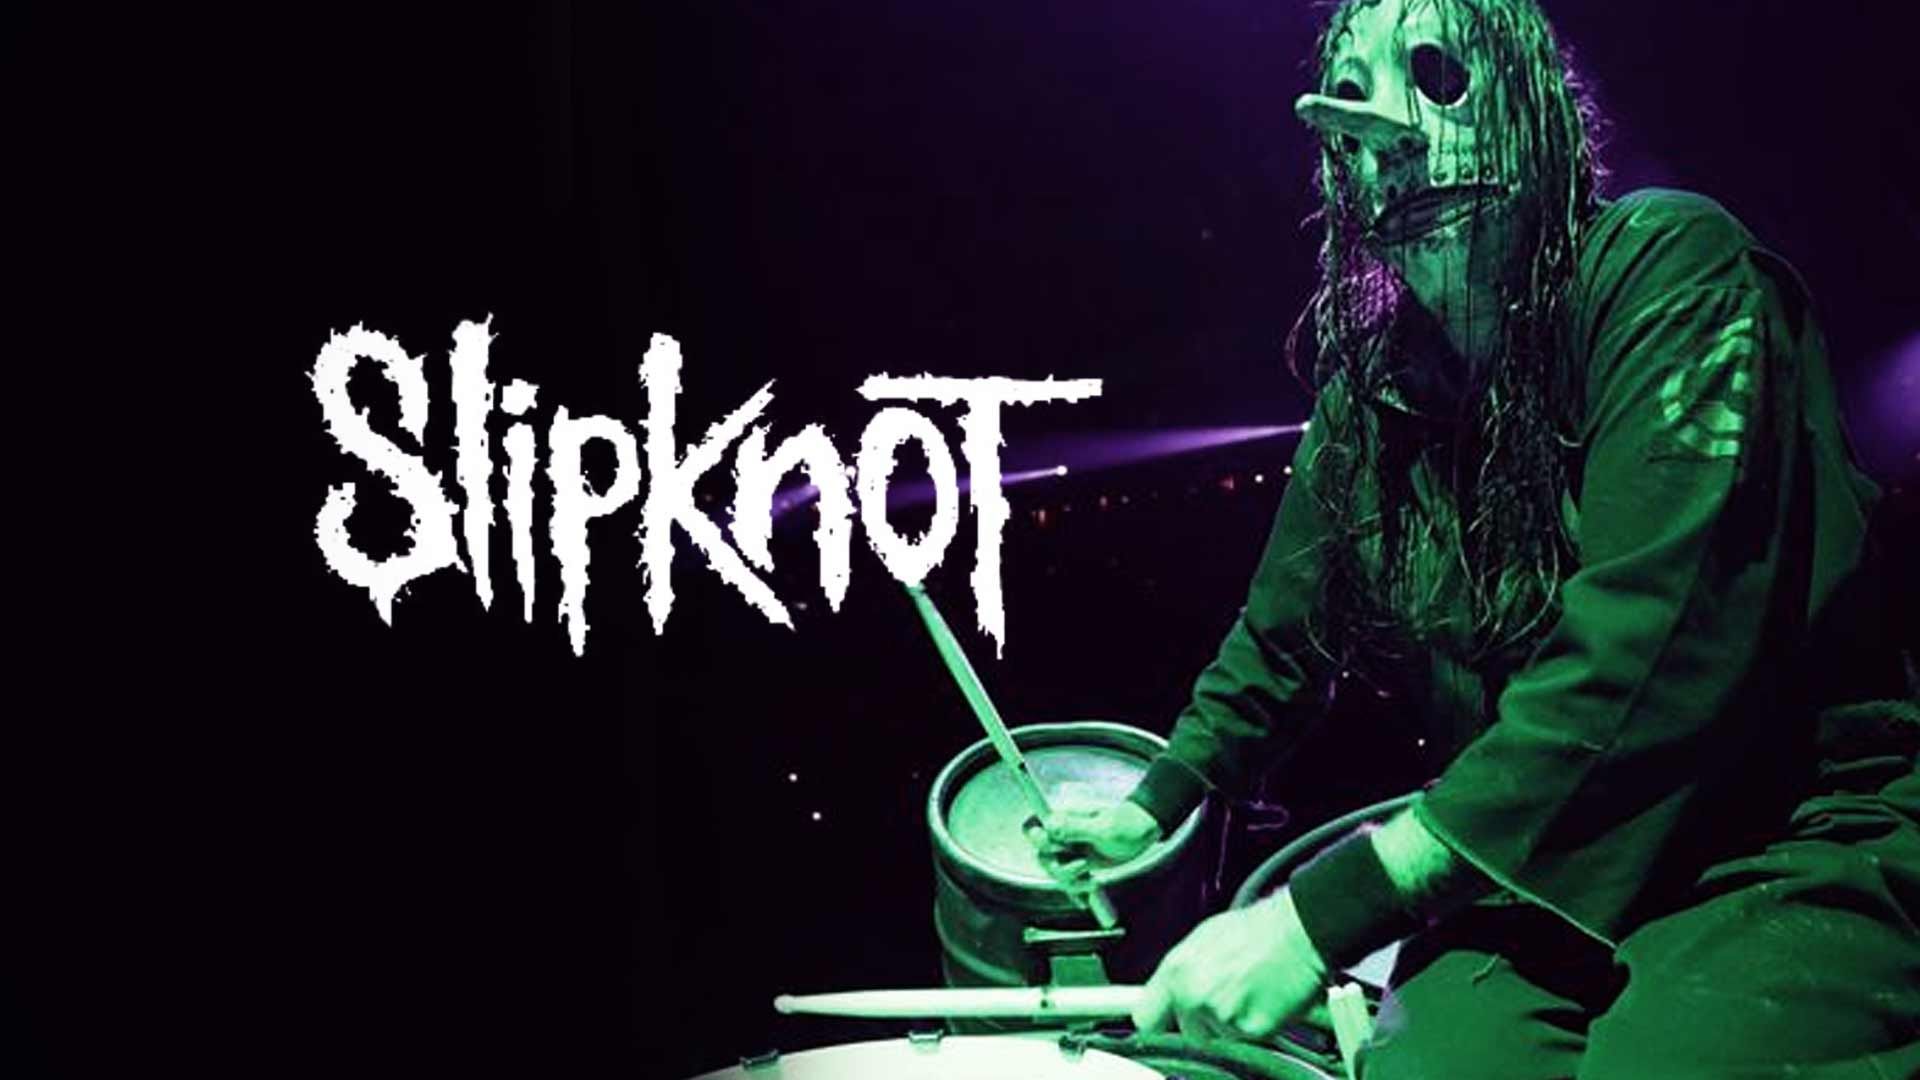 Slipknot Drummer Chris Fehn Sues Band Over Money Dispute